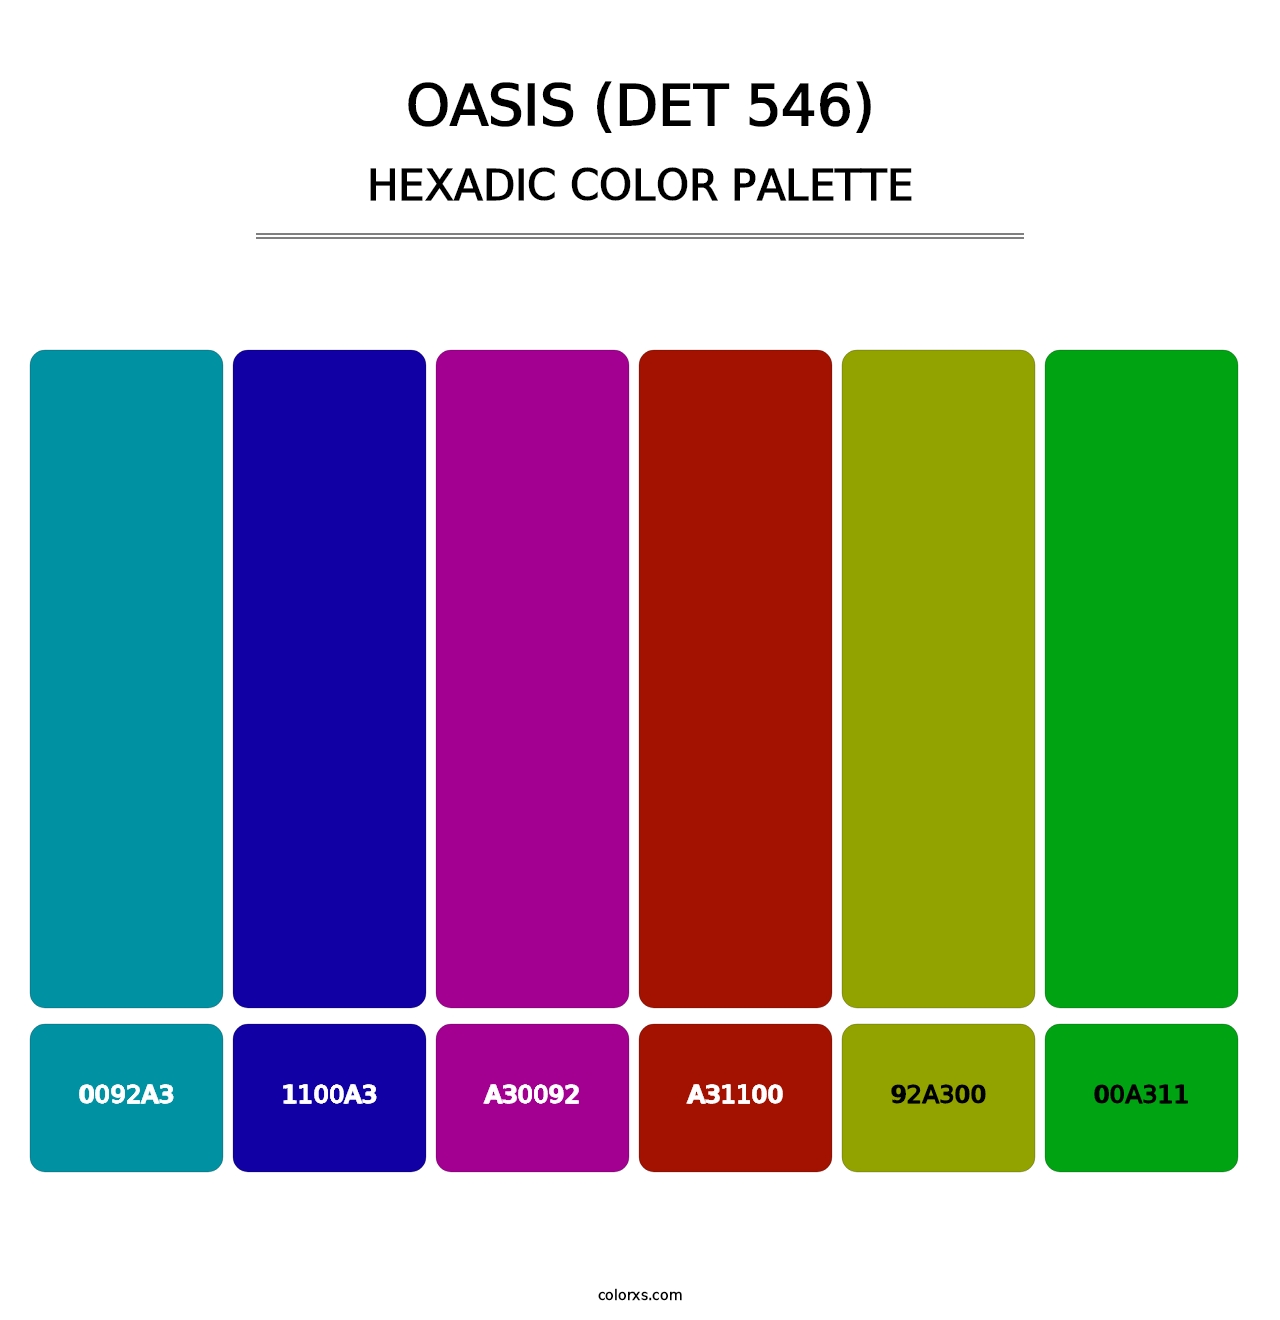 Oasis (DET 546) - Hexadic Color Palette